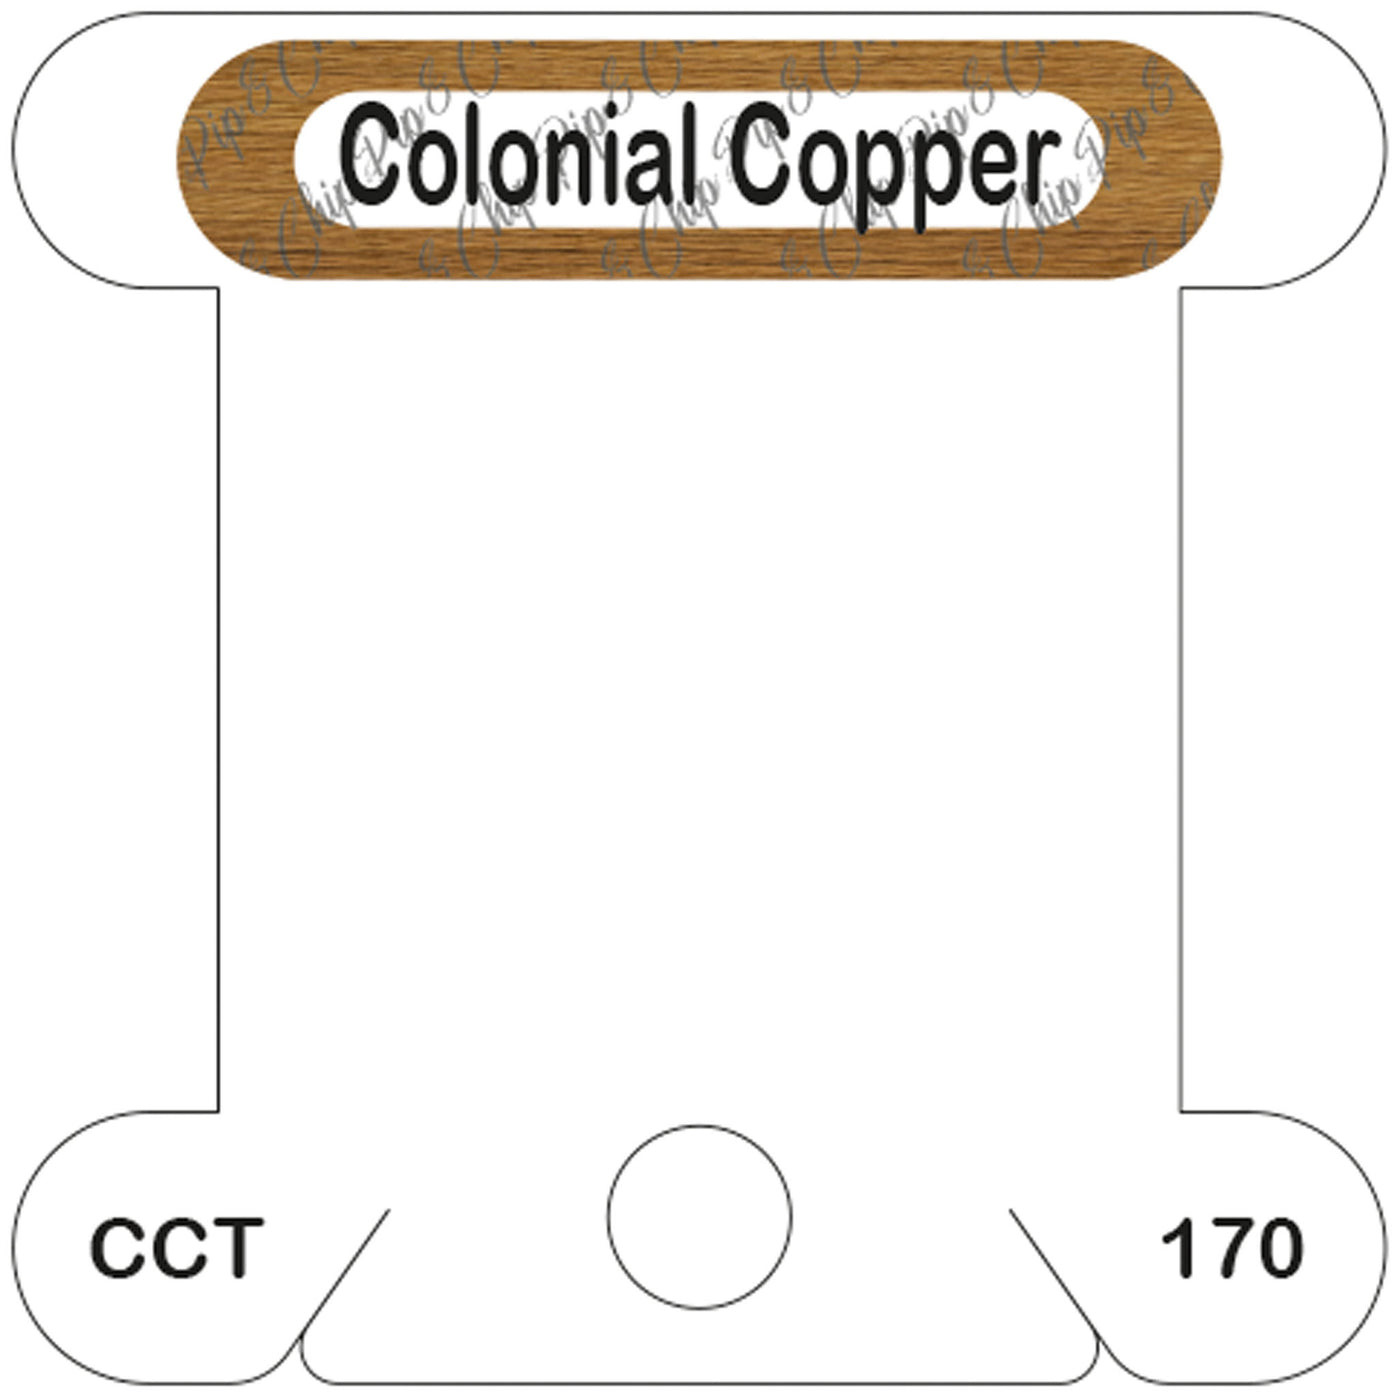 Classic Colorworks Colonial Copper acrylic bobbin